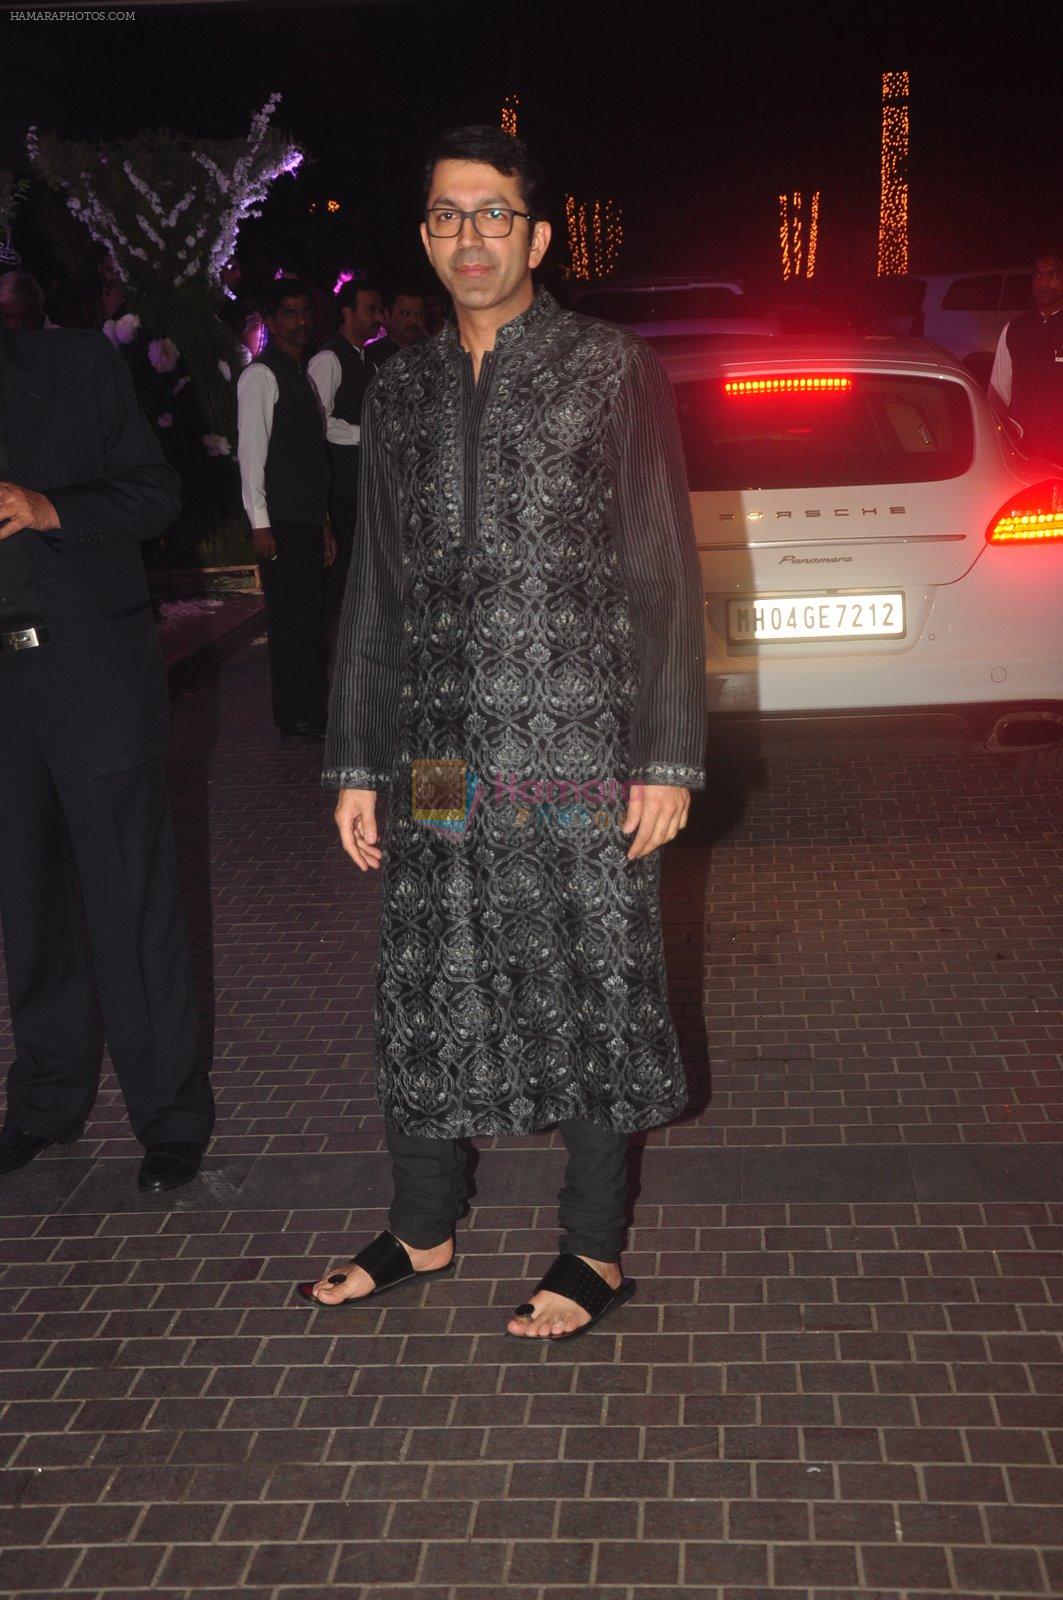 at Sangeet ceremony of Riddhi Malhotra and Tejas Talwalkar in J W Marriott, Mumbai on 13th Dec 2014